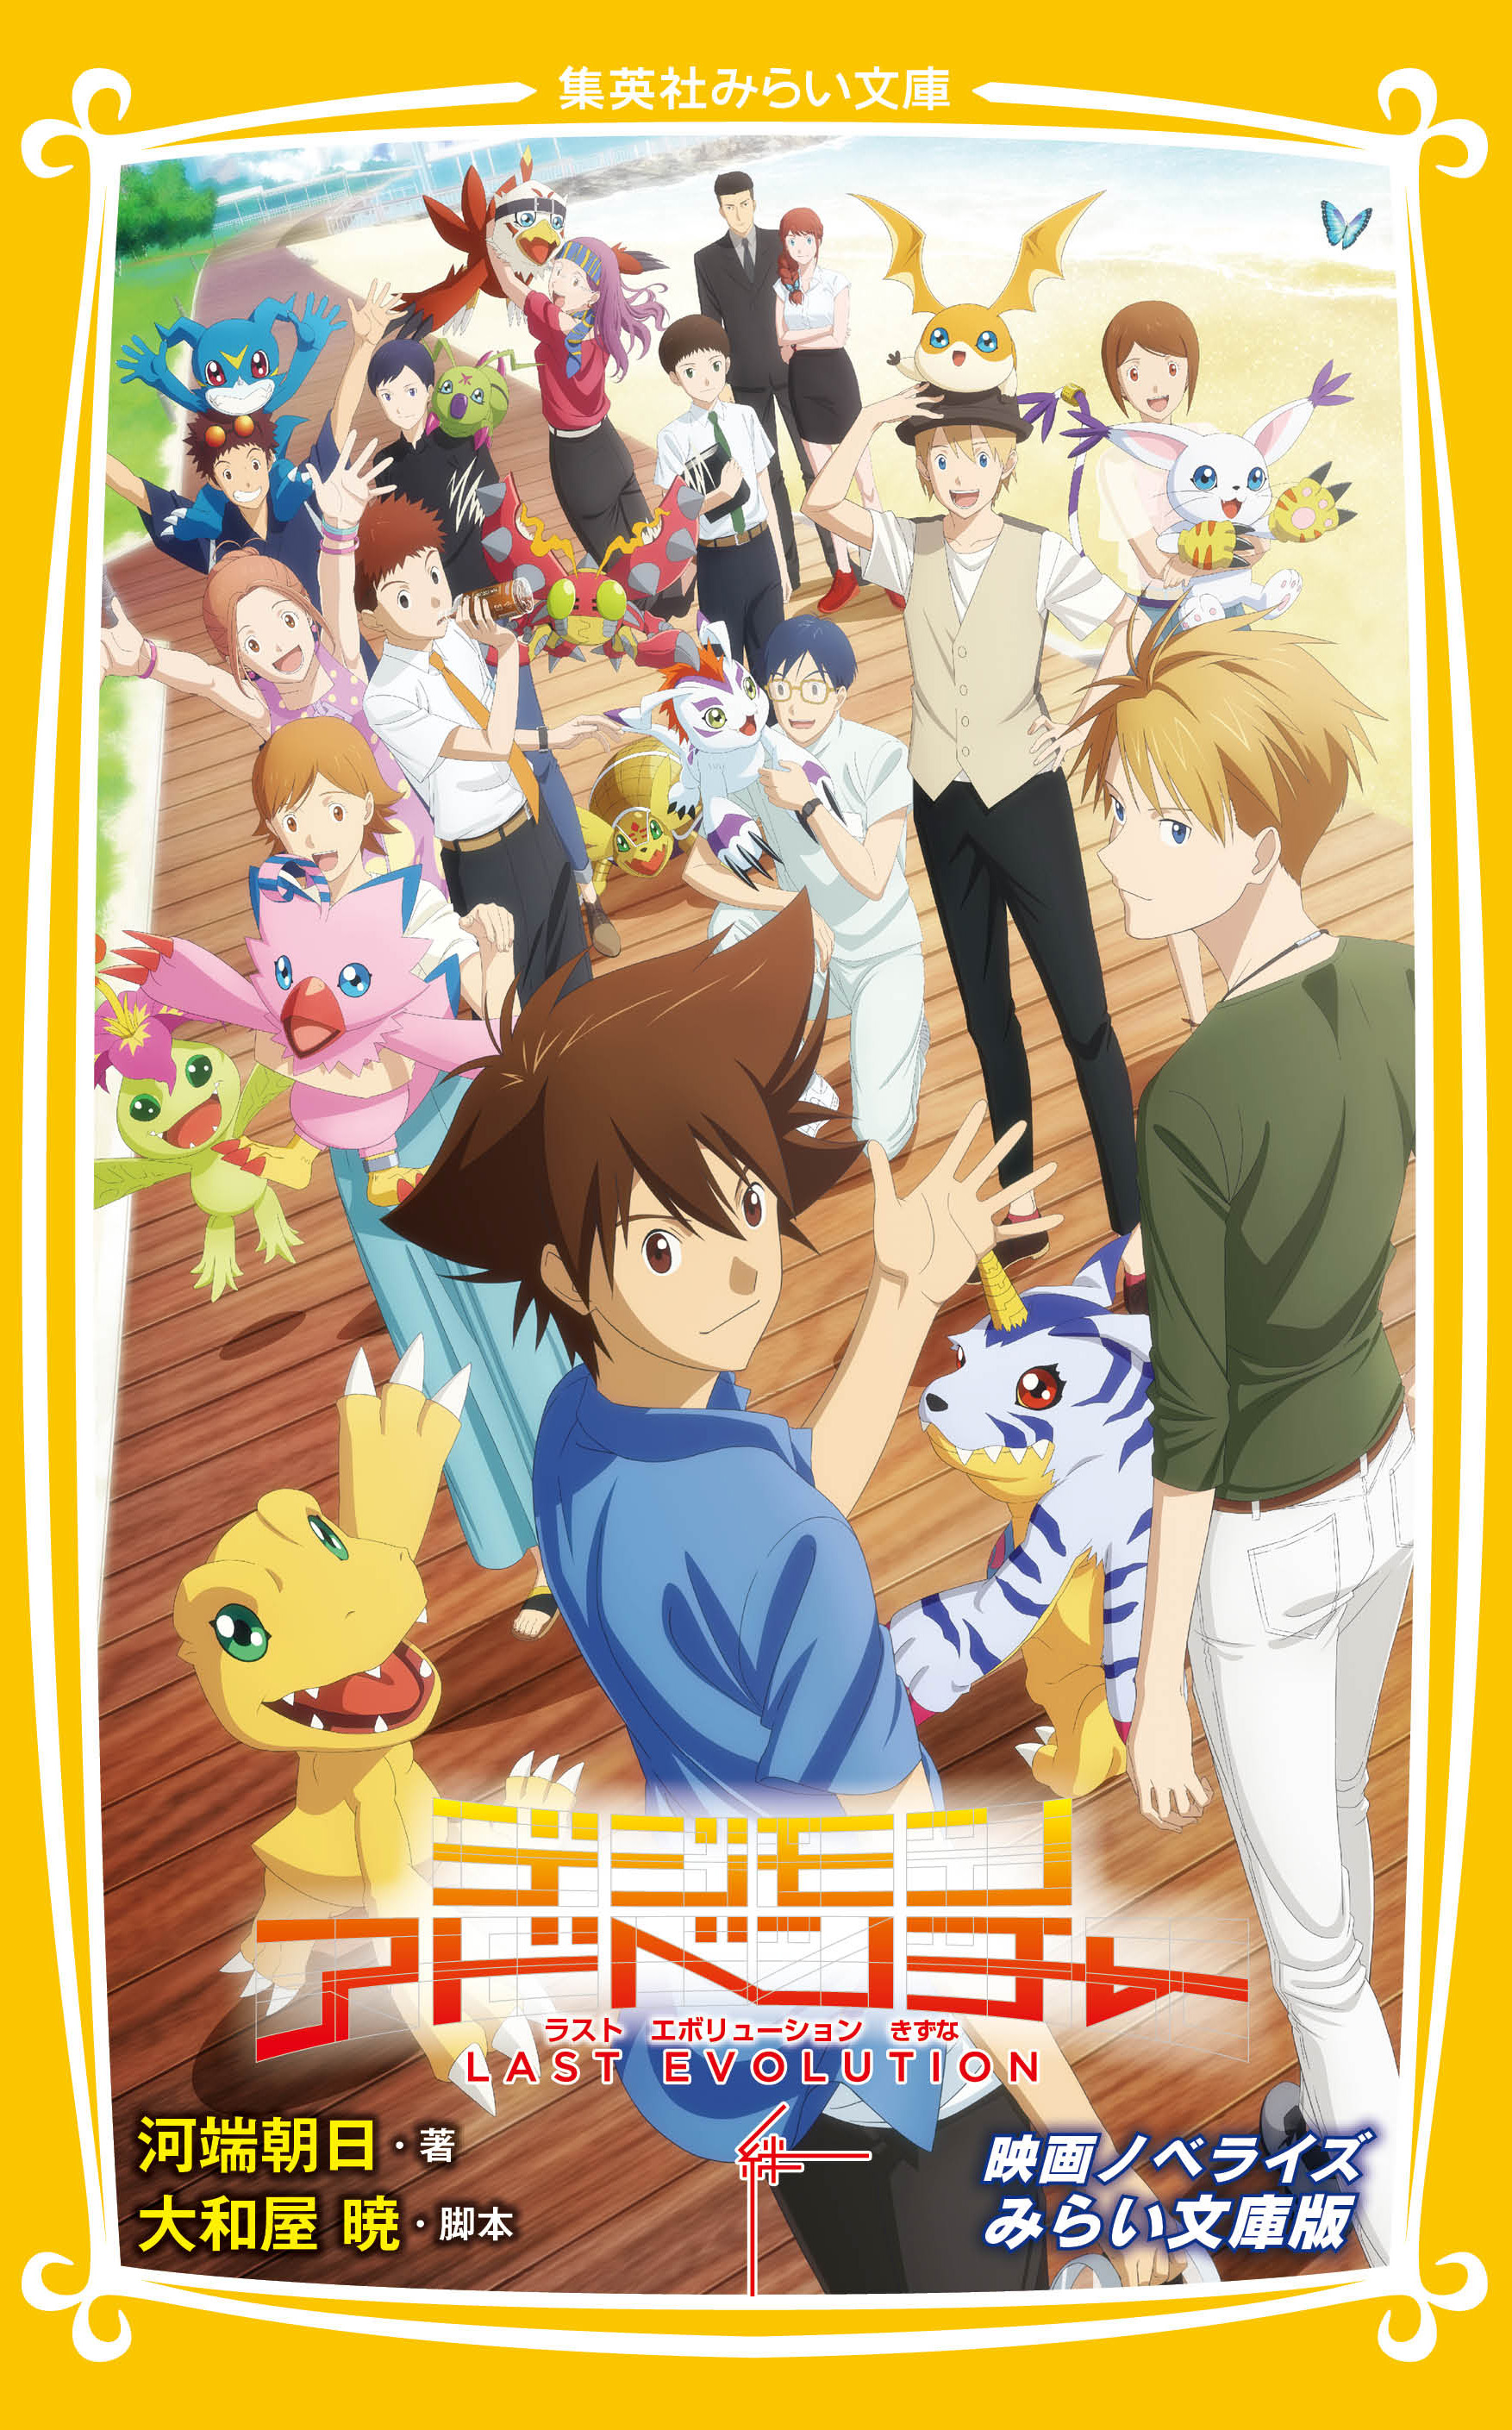 Digimon Adventure: Last Evolution Kizuna Movie Novelize Mirai Bunko version